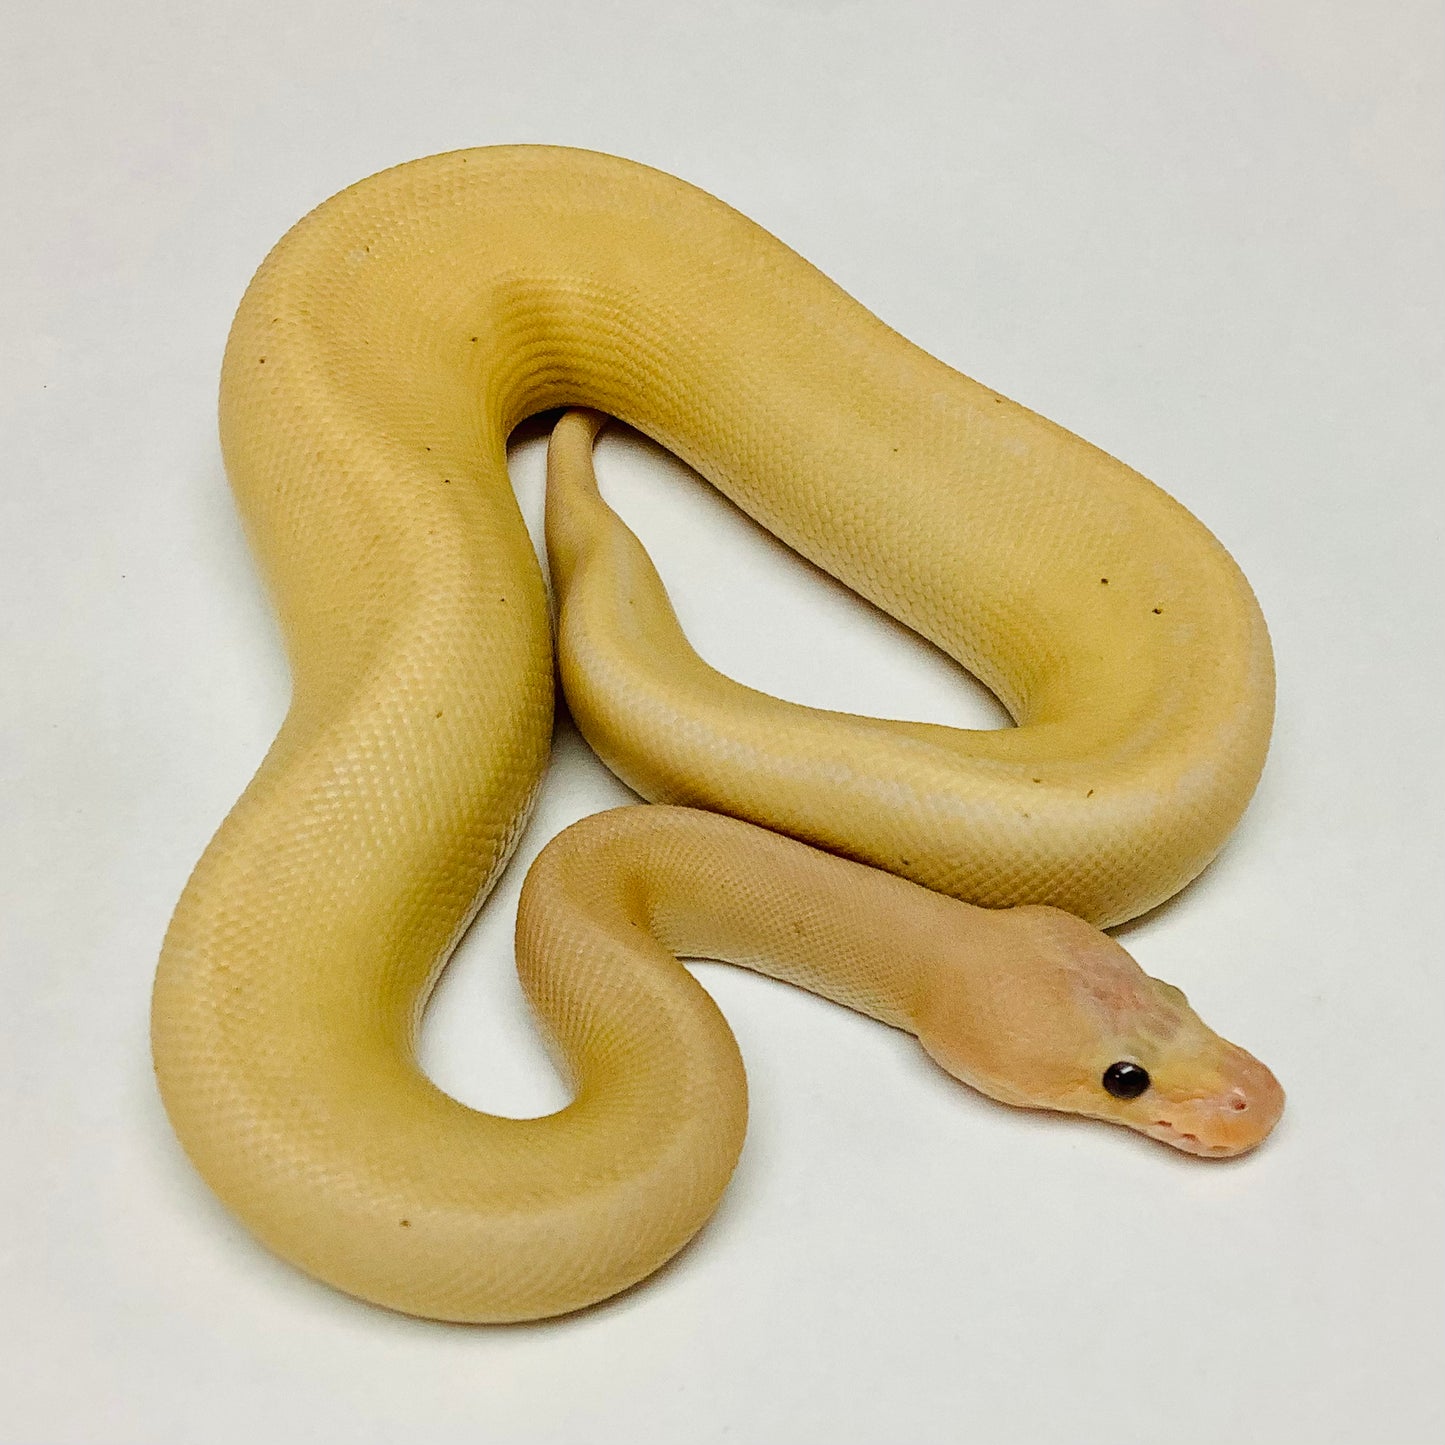 Pastel Banana Camo Ball Python - Male #2022M01